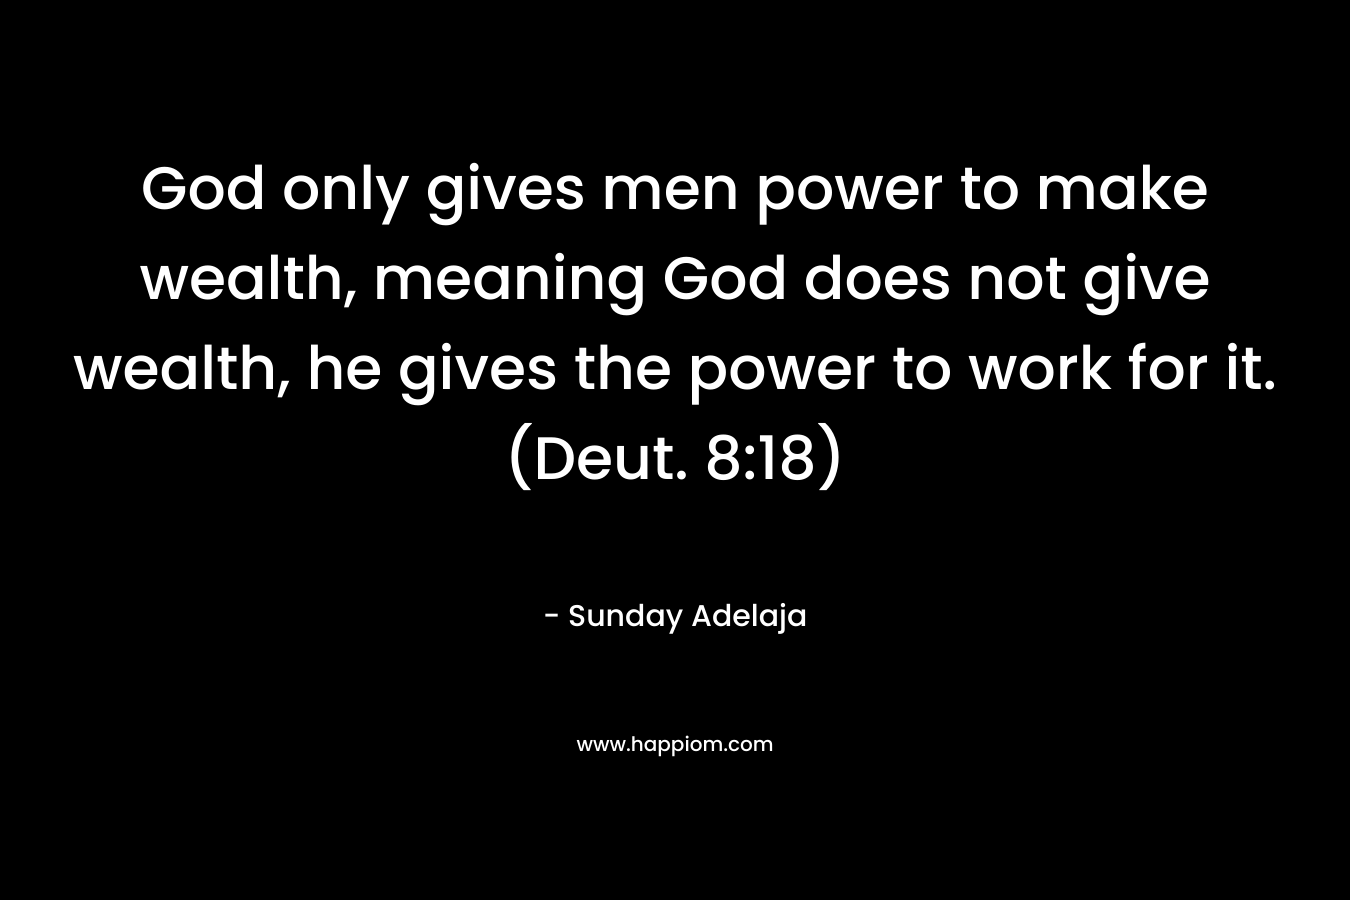 God only gives men power to make wealth, meaning God does not give wealth, he gives the power to work for it. (Deut. 8:18)